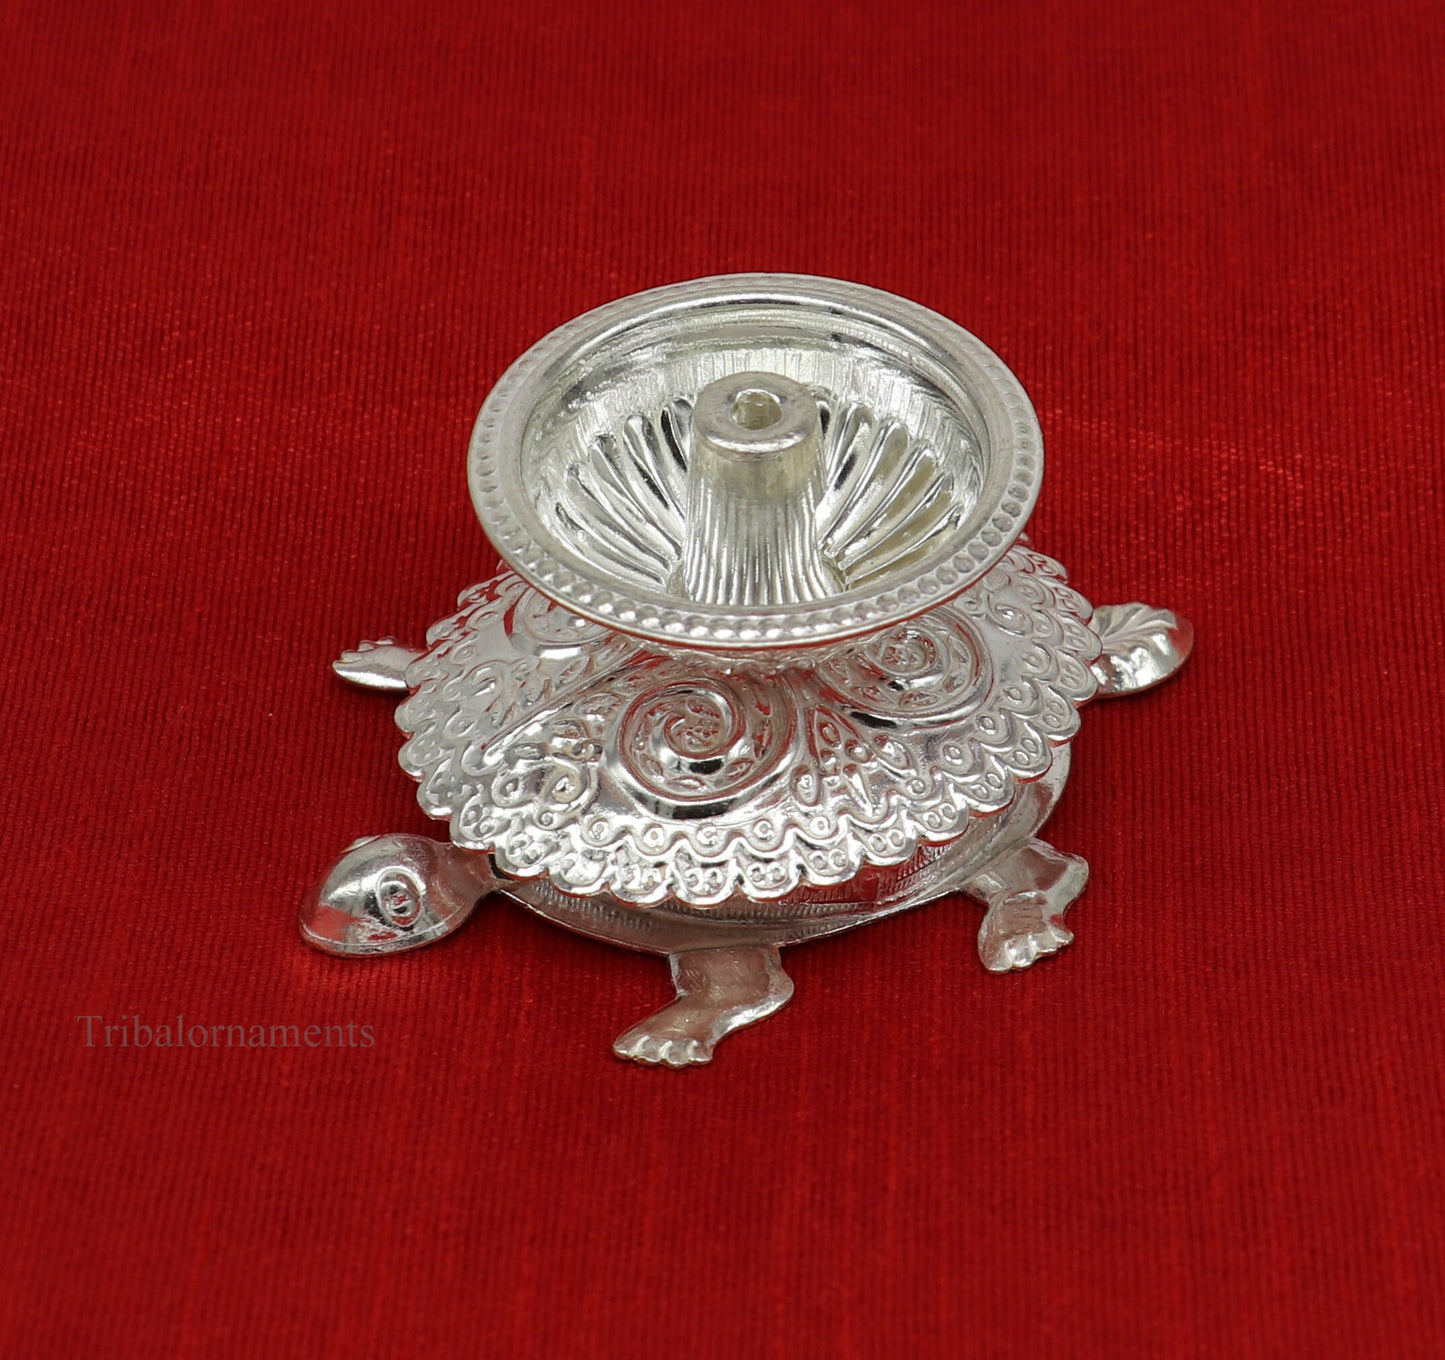 Diwali puja special solid silver handmade tortoise design oil lamp, silver deepak diya, silver temple utensils ,silver puja articles su415 - TRIBAL ORNAMENTS